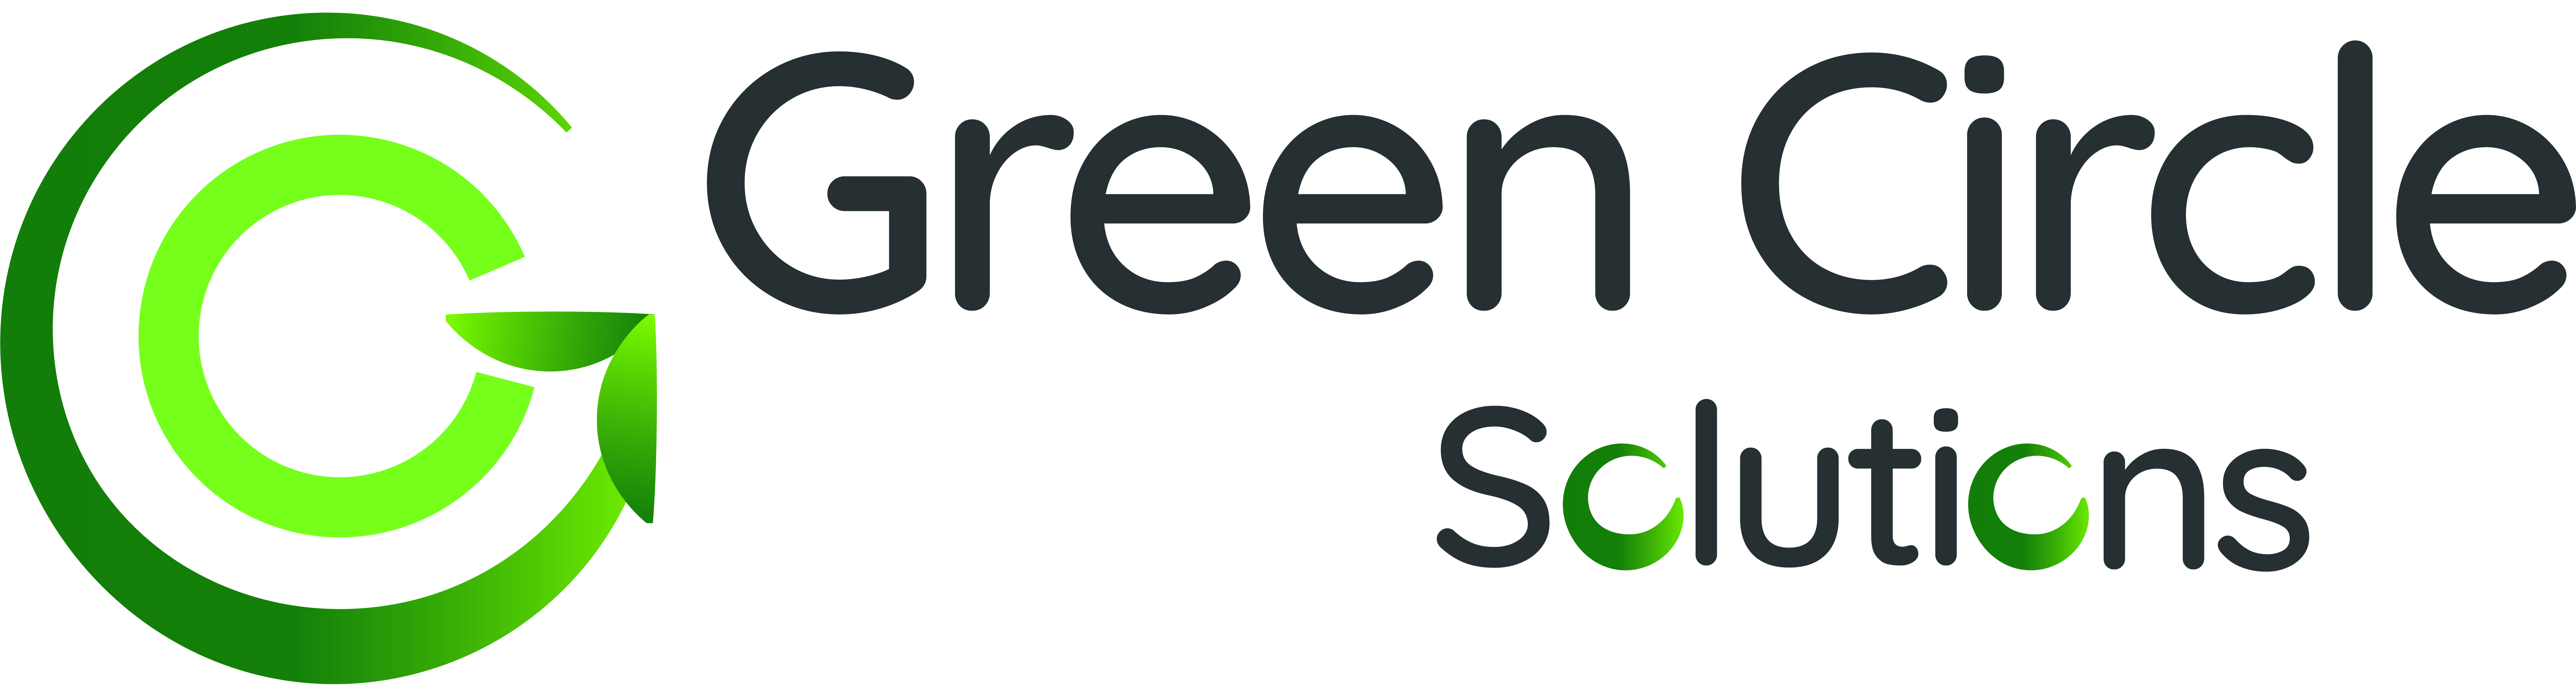 Green Circle Solutions Logo Full Colour Main Logo JPEG